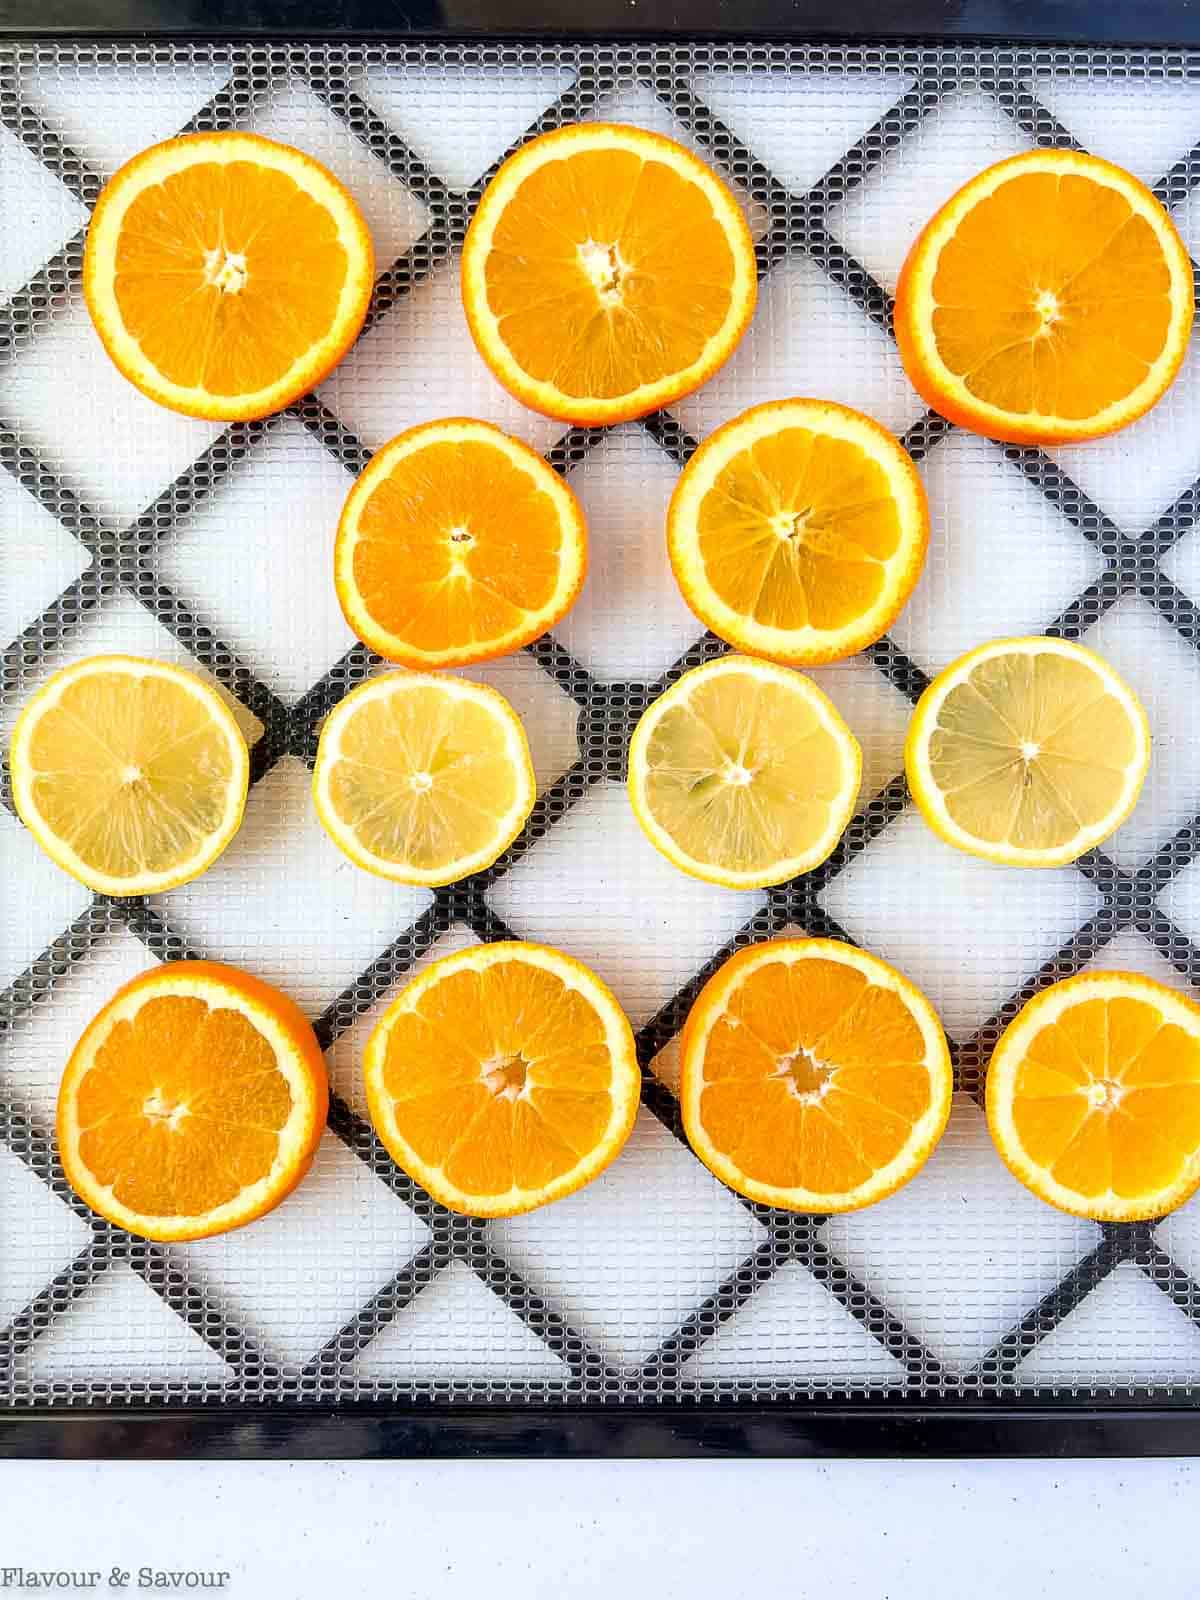 Orange and lemon slices on a dehydrator tray.